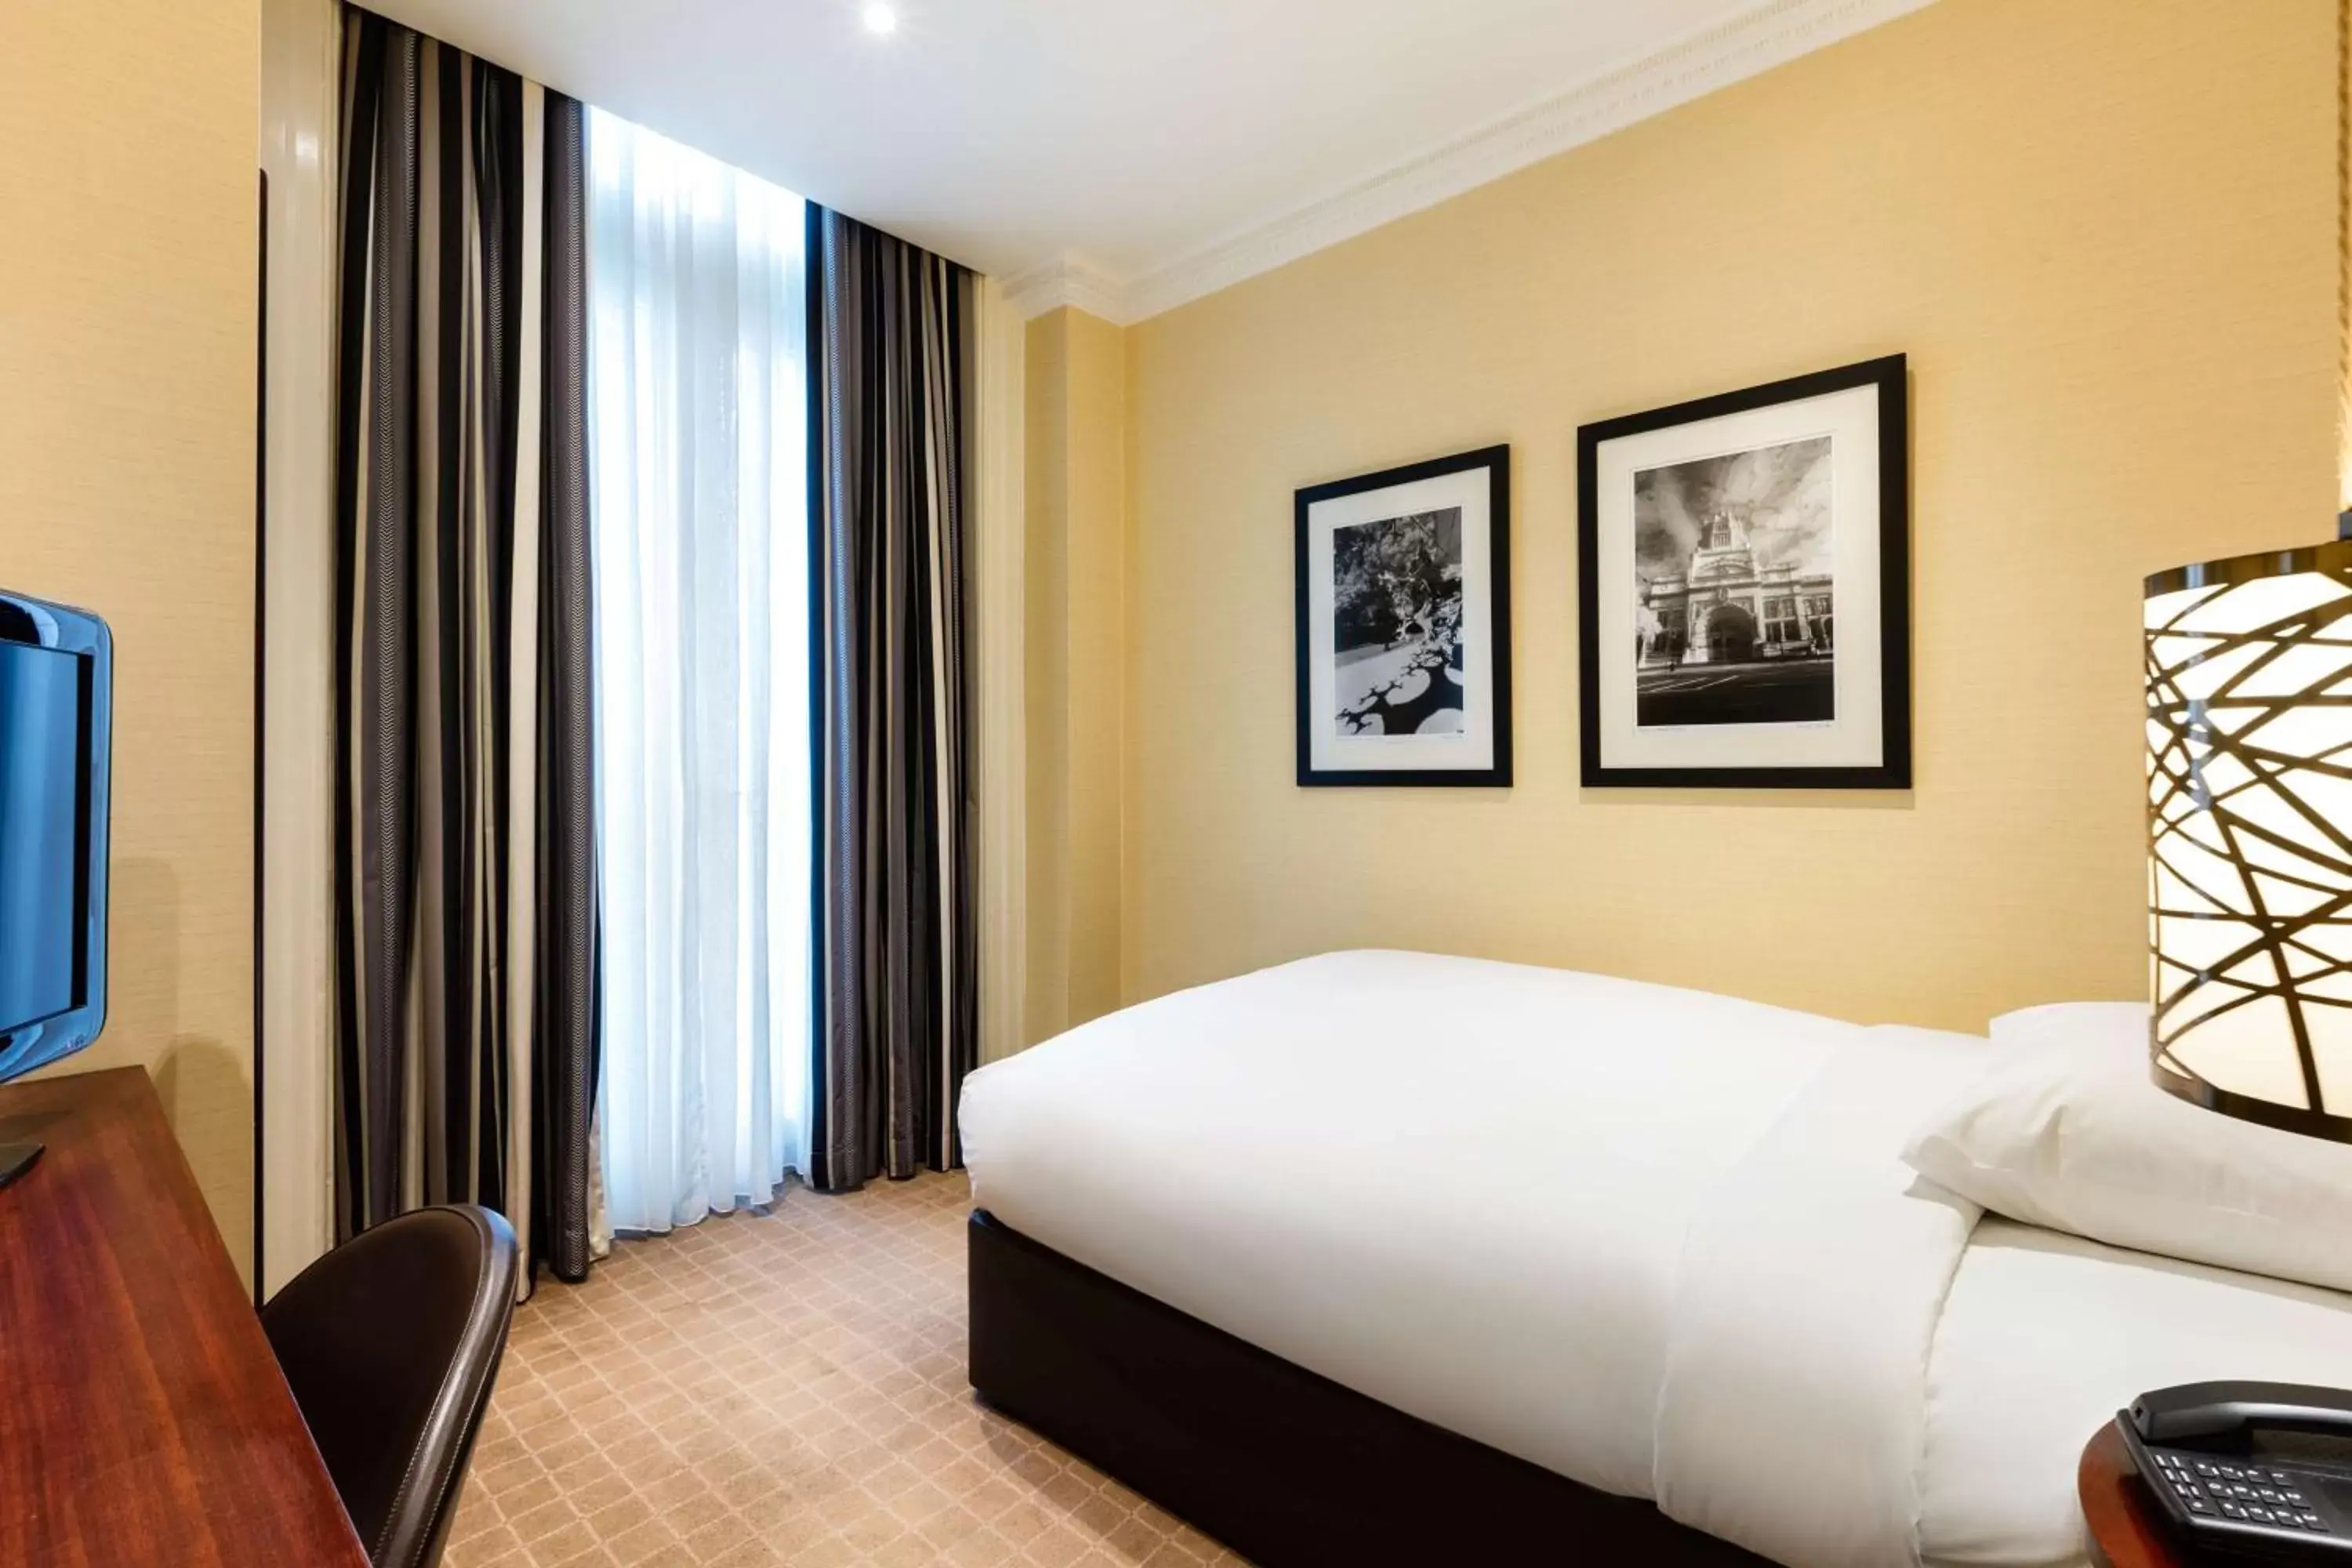 Superior Single Room in Radisson Blu Edwardian Vanderbilt Hotel, London